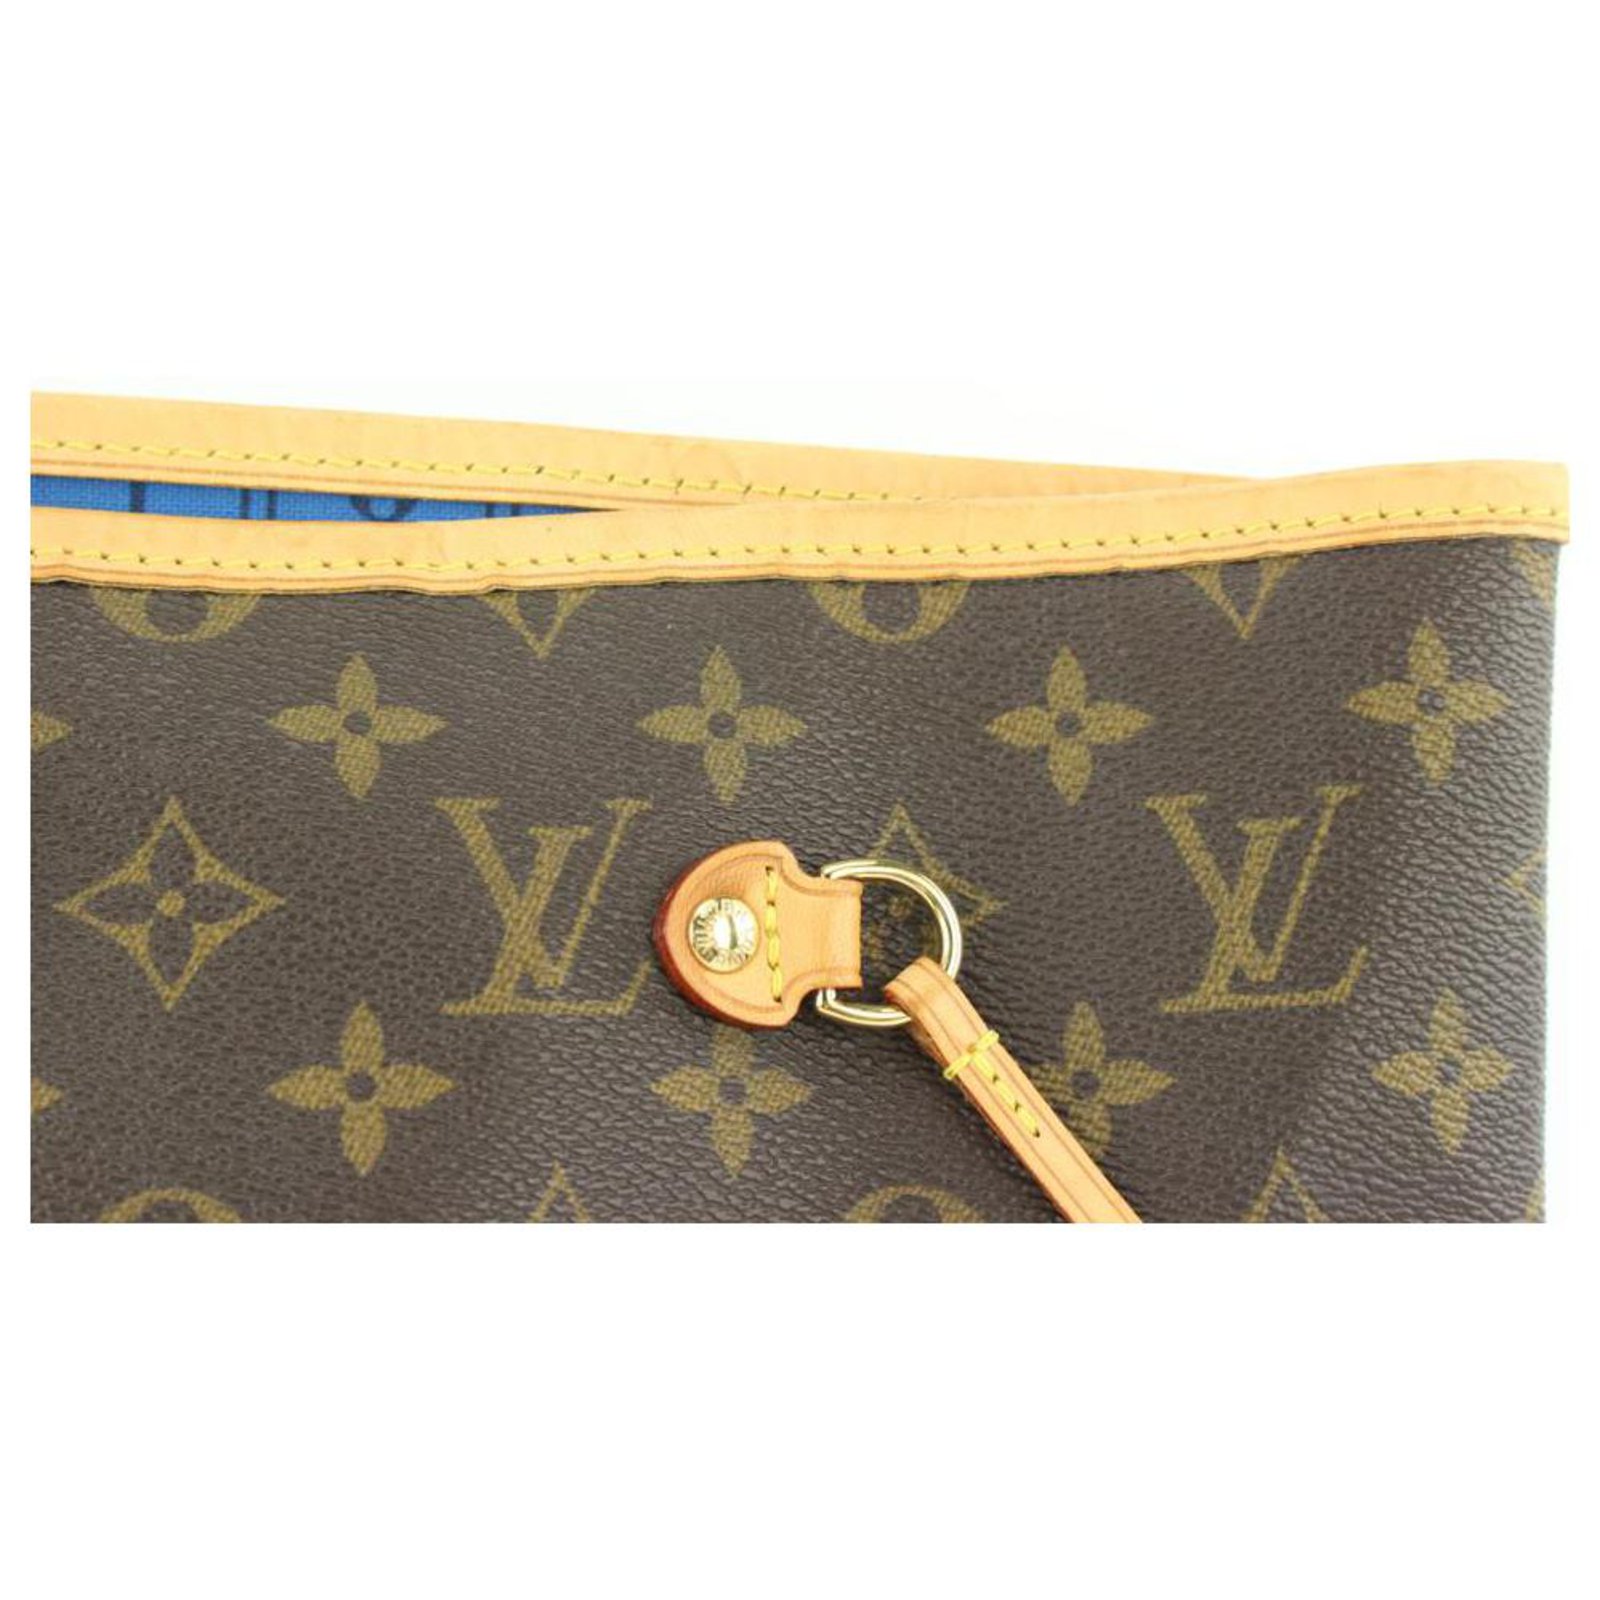 Louis Vuitton Large Blue Monogram Mon Stripe Neverfull GM Tote Bag 369lvs525